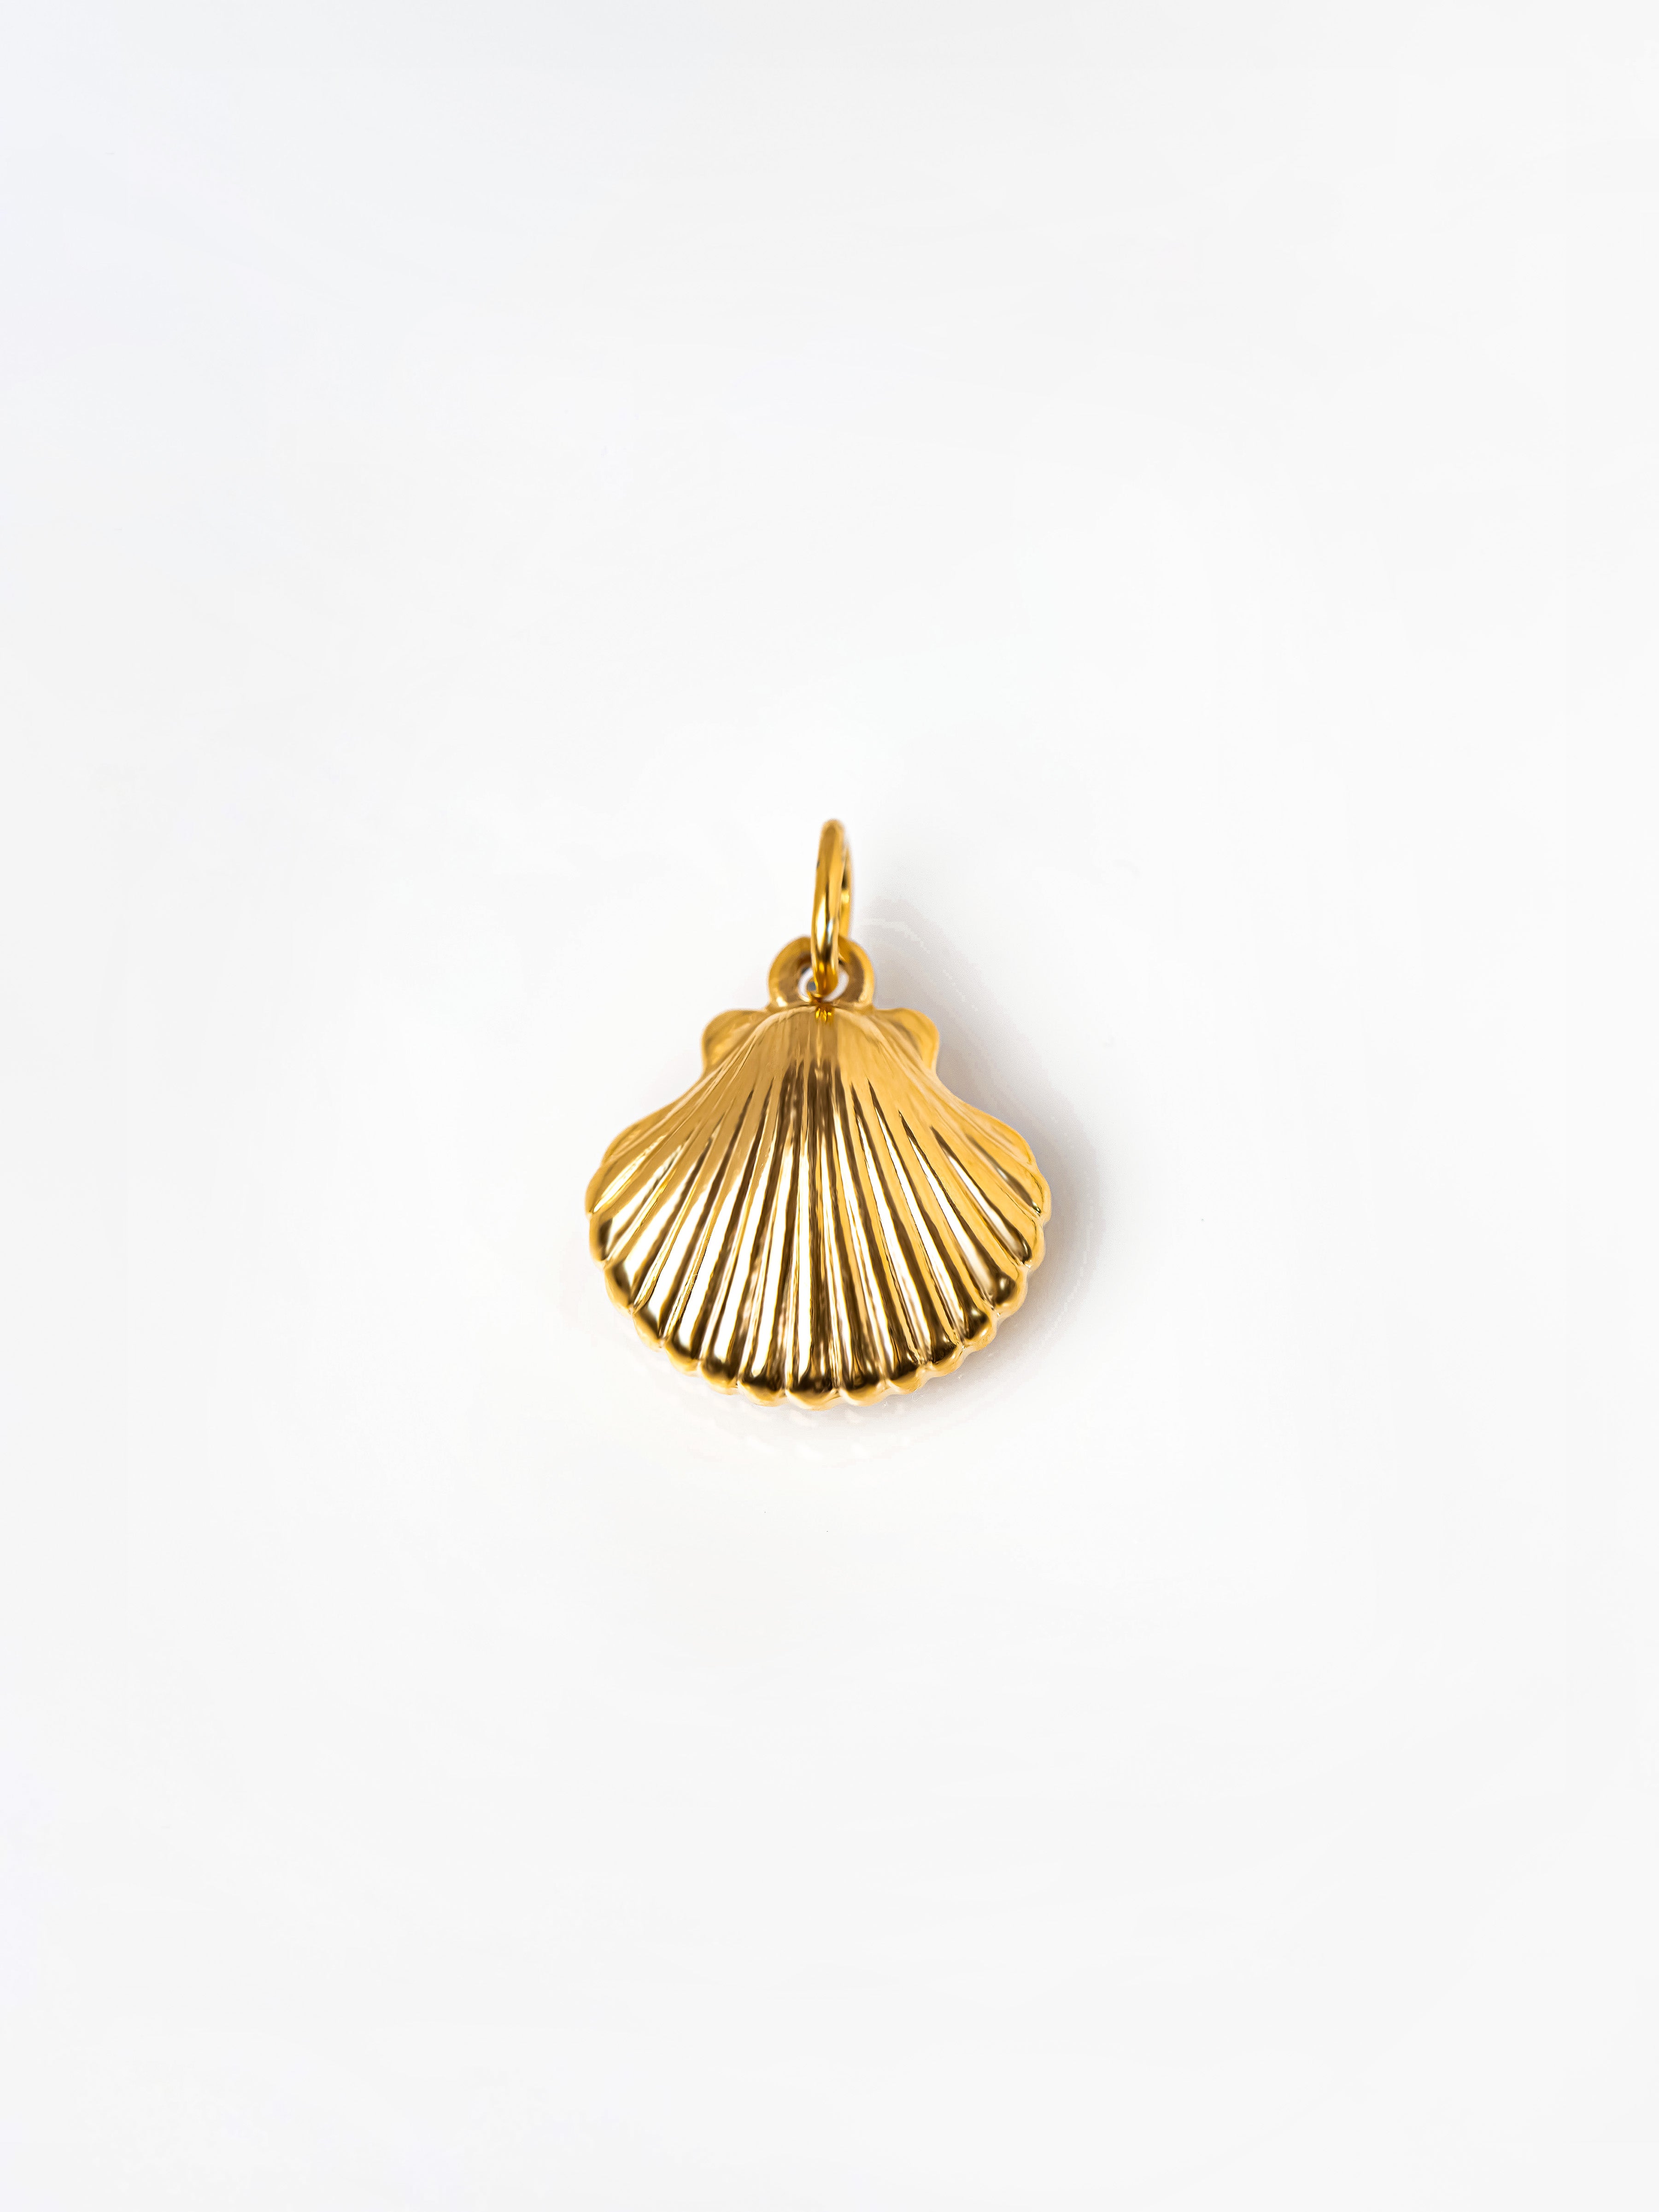 Gold Medium Sea Shell Pendant / Charm